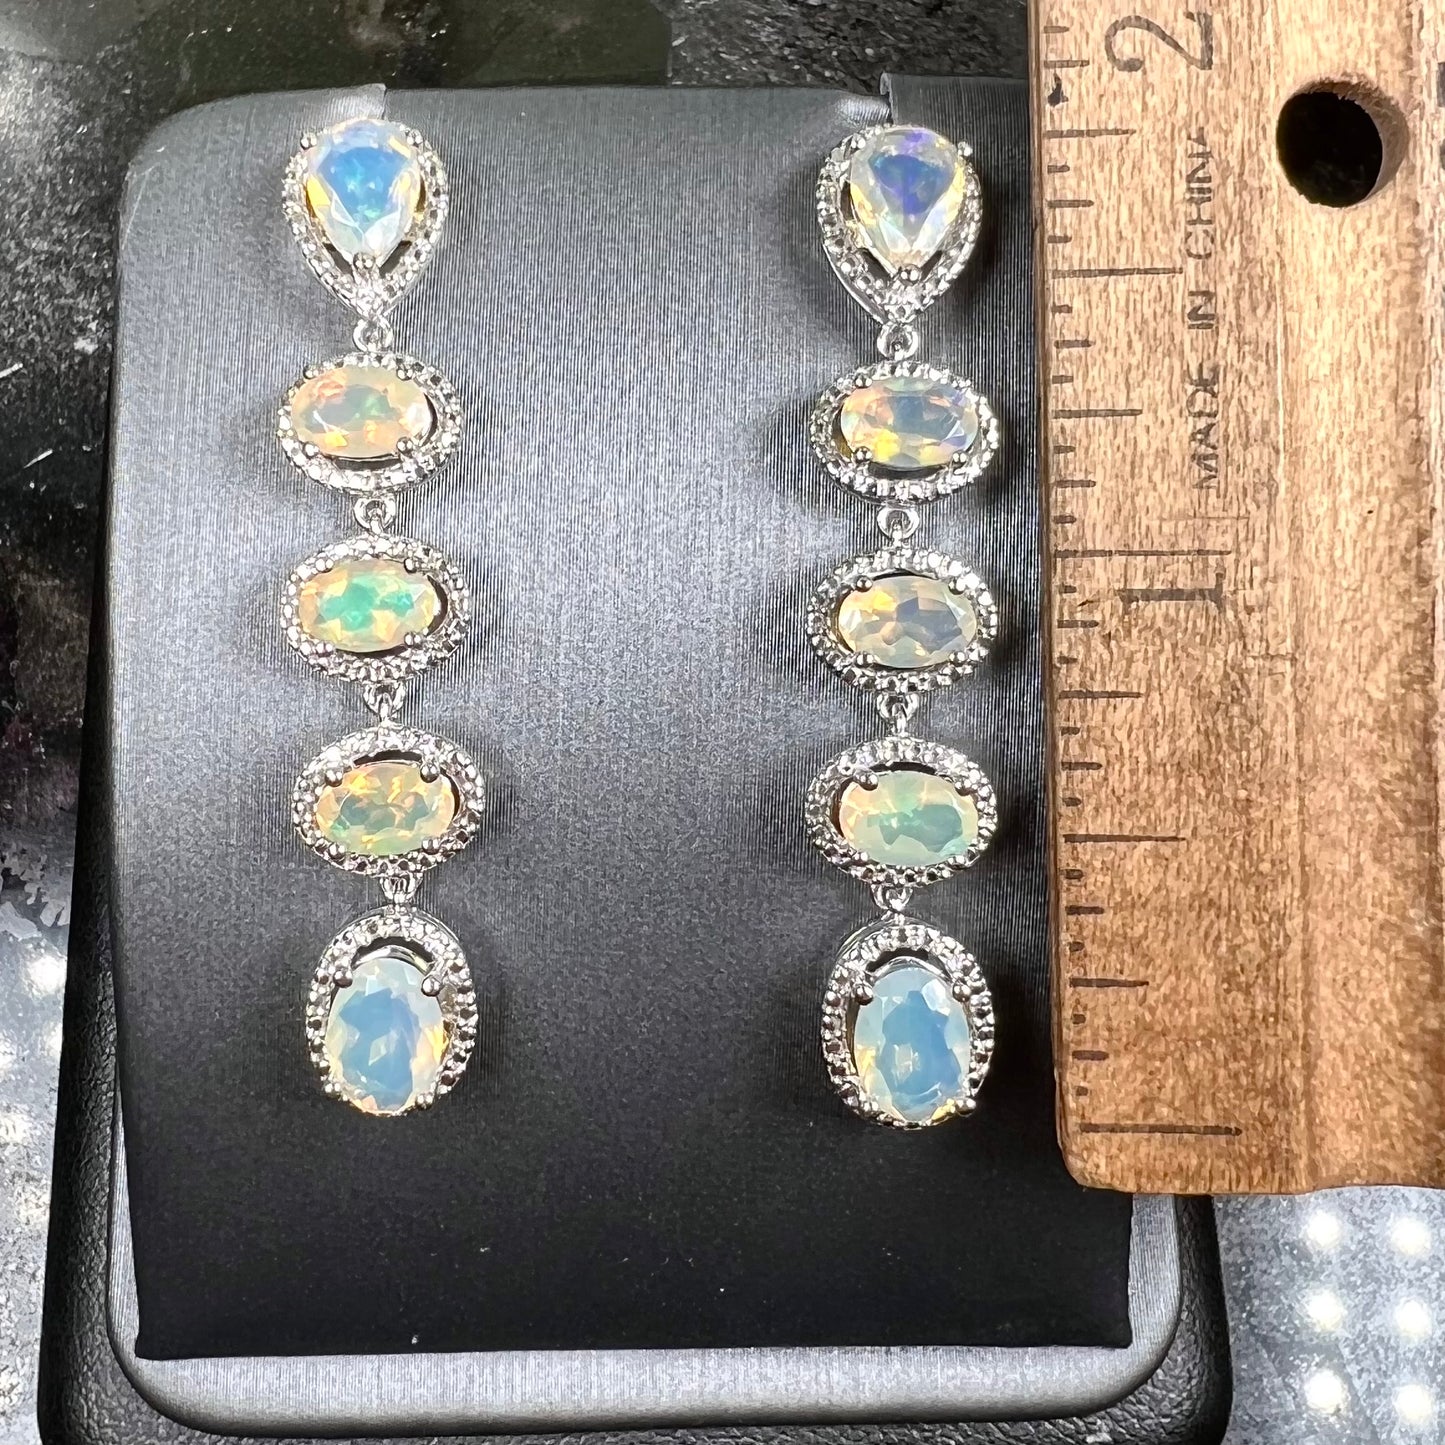 A pair of sterling silver Ethiopian opal dangle earrings.